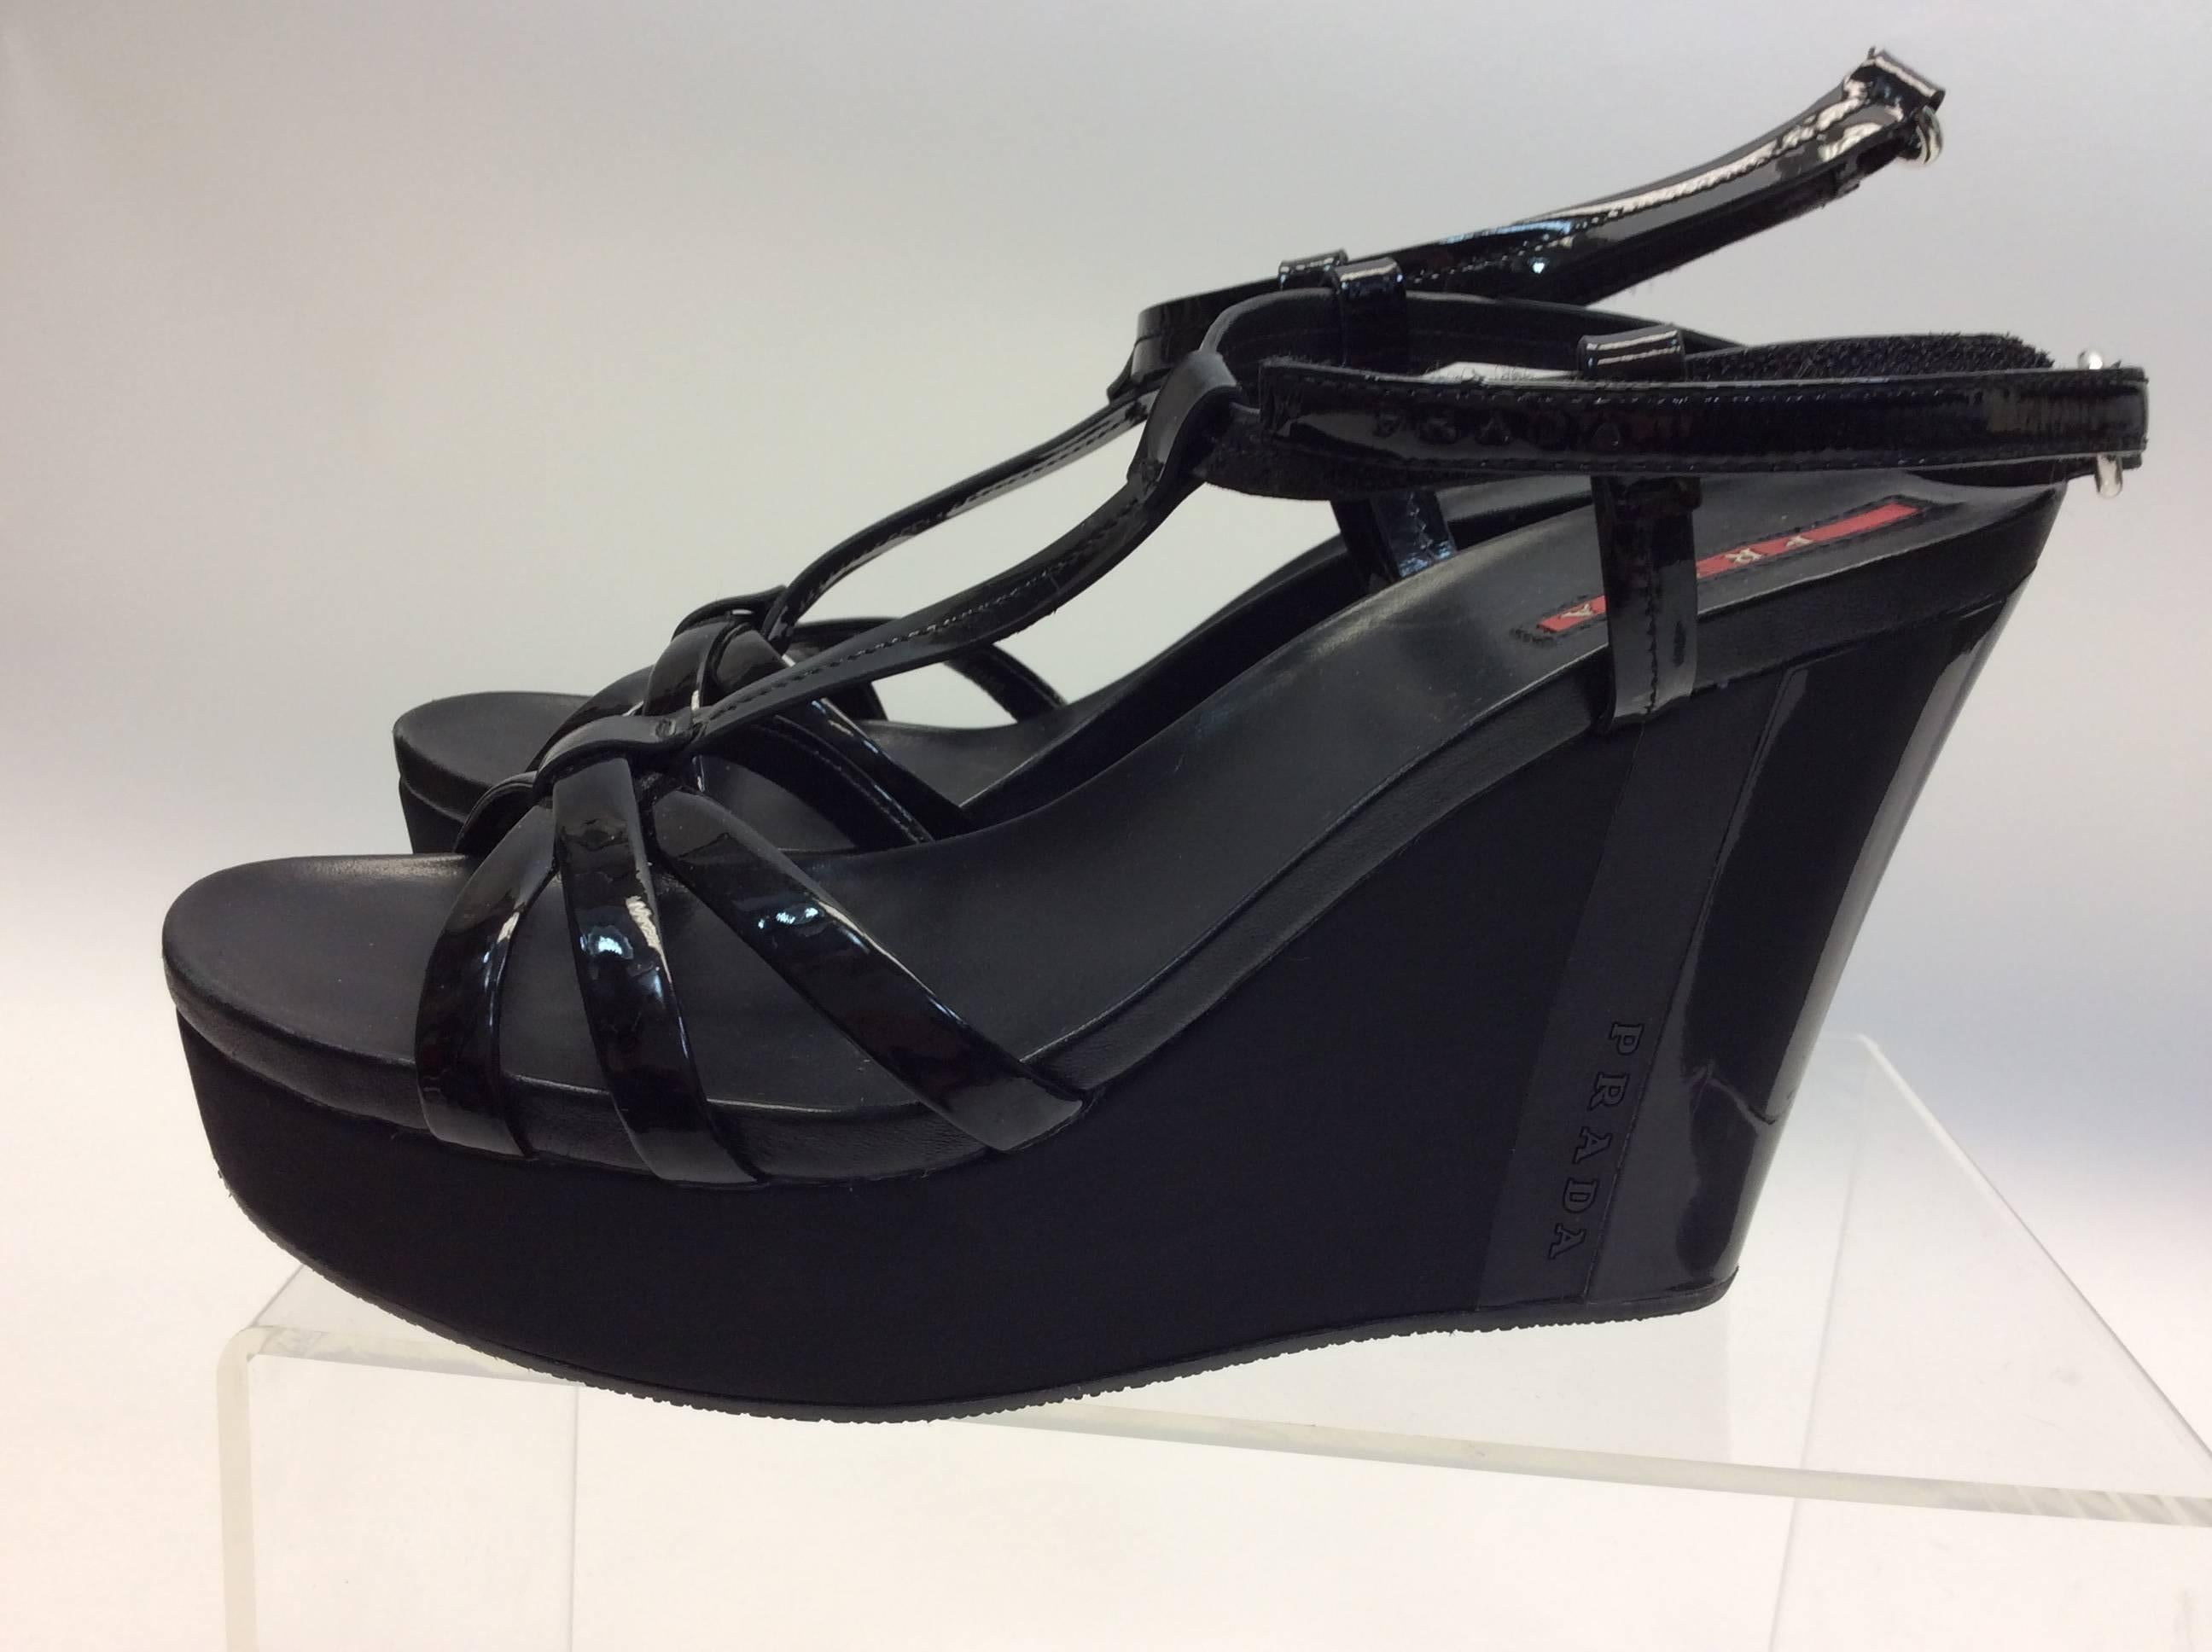 Prada Black Patent Leather Wedge
$225
Size 39
4.5” heel
1” platform